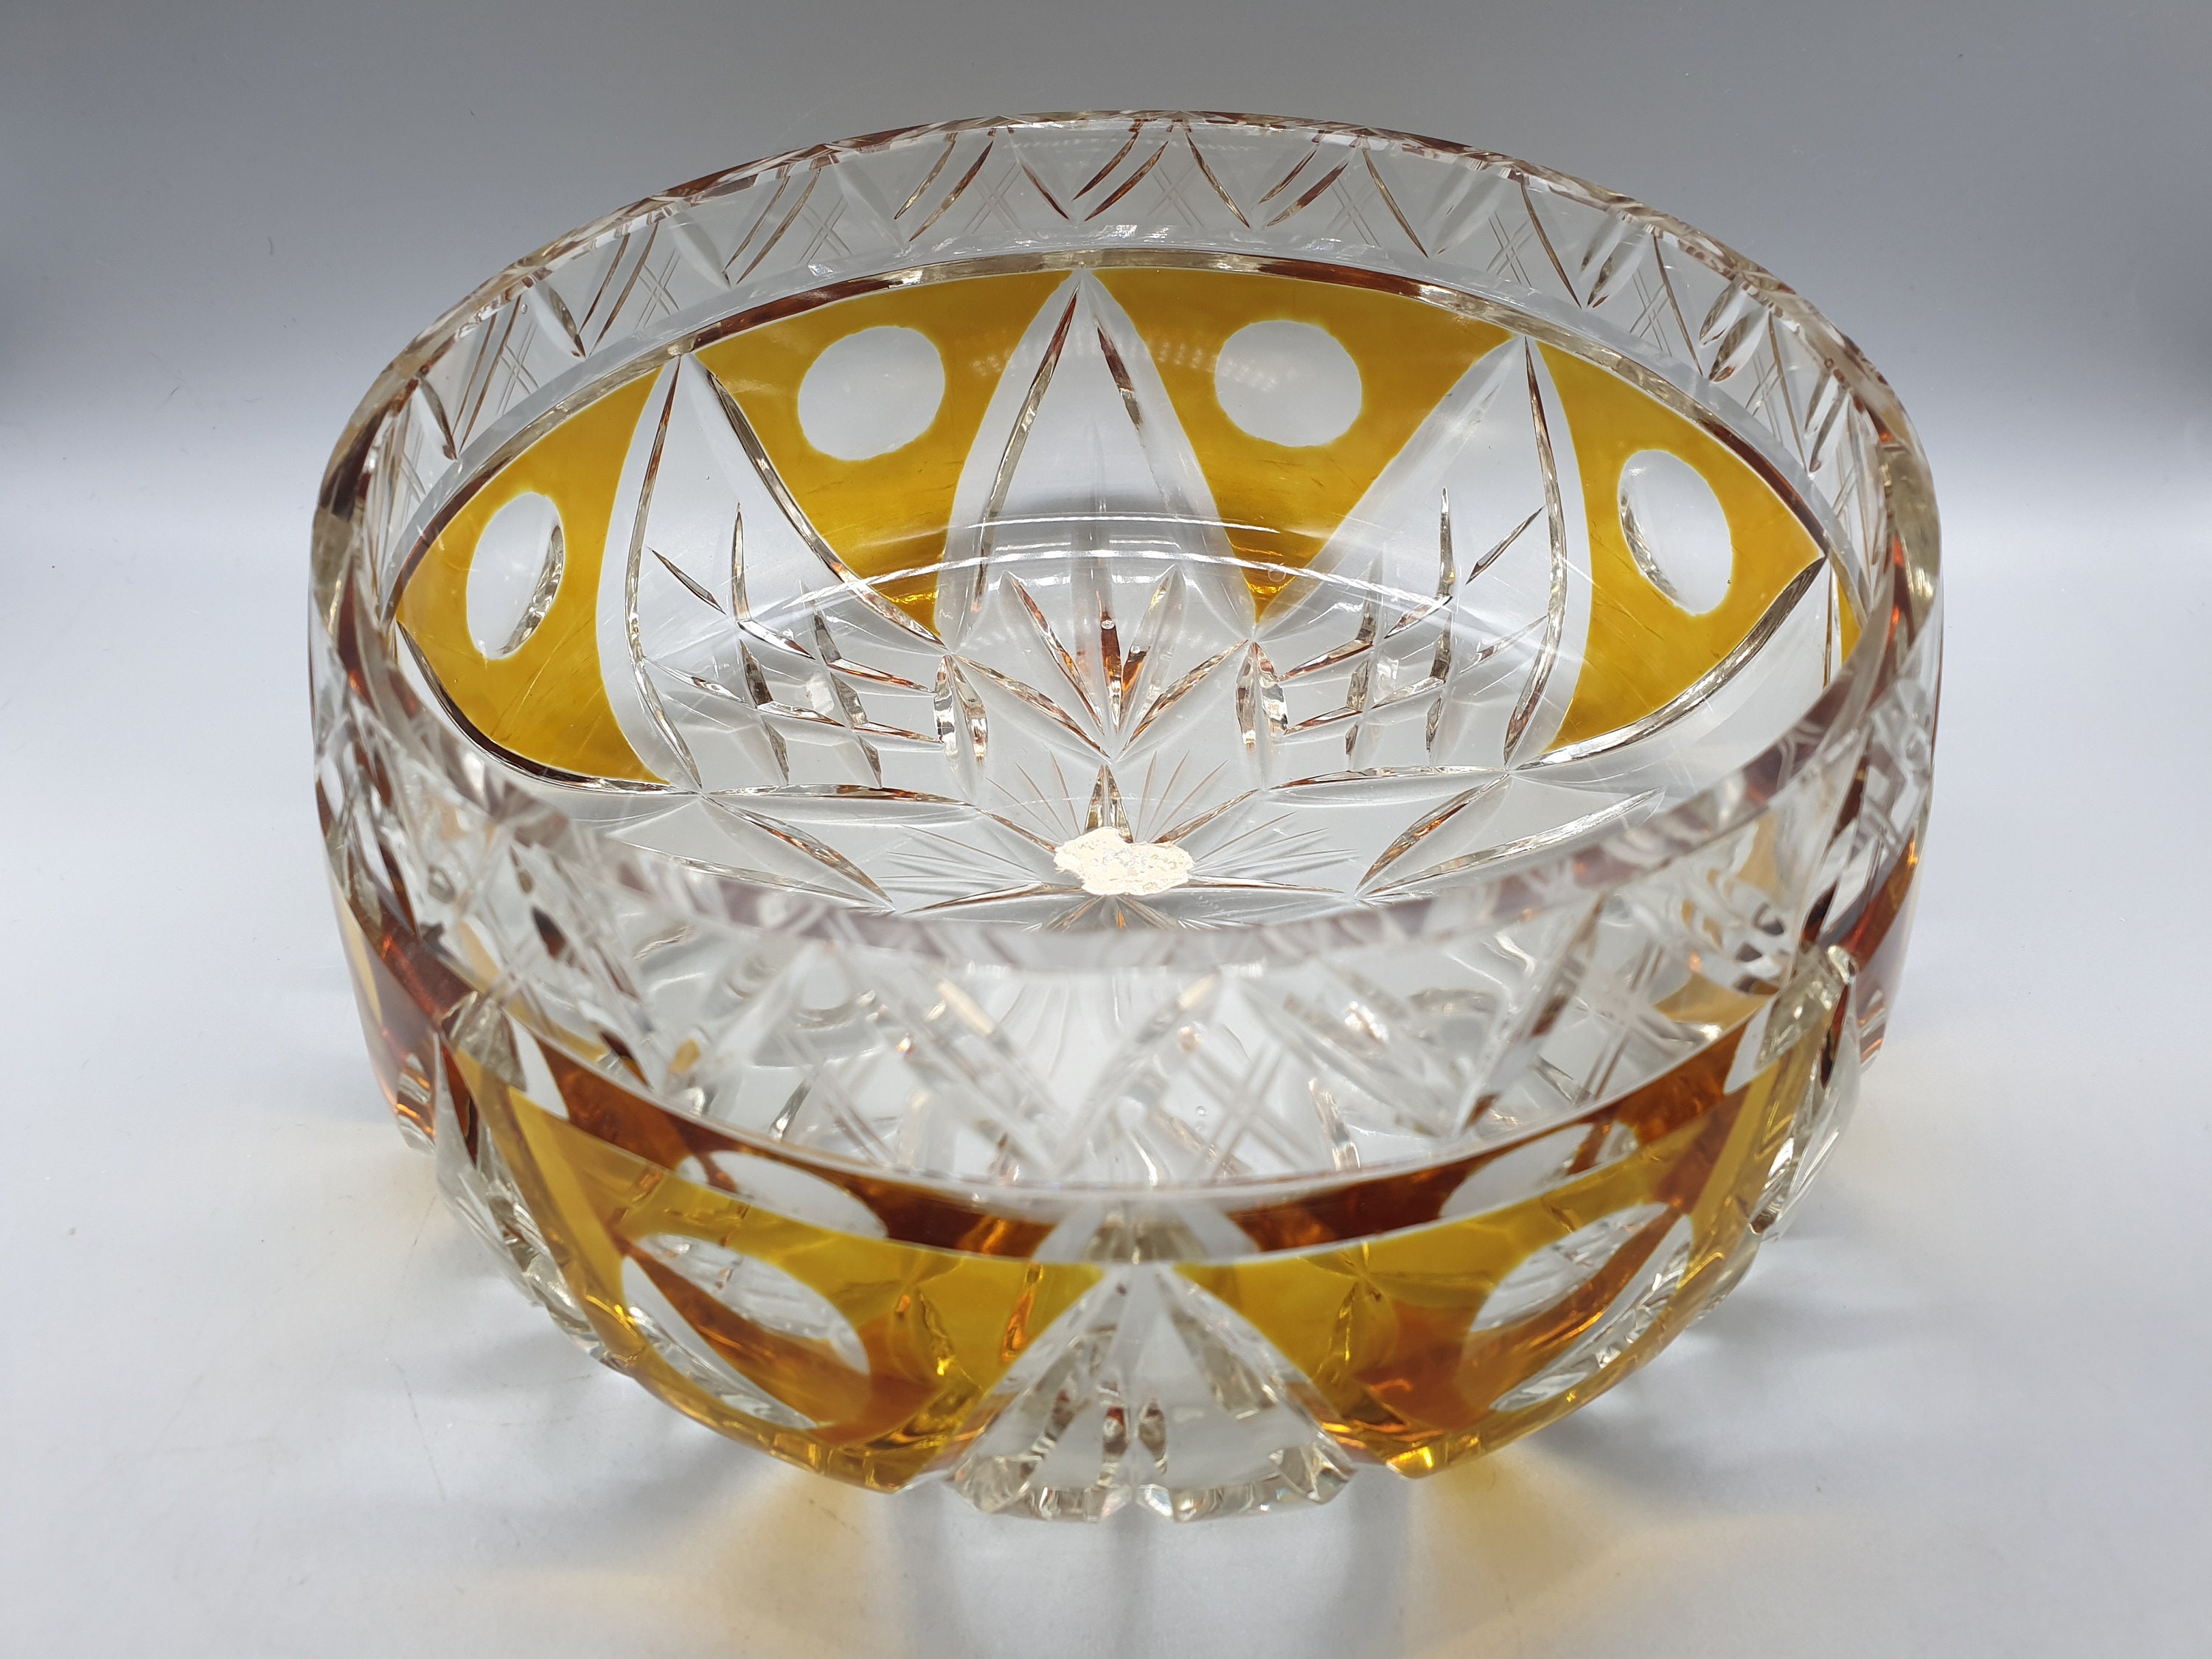 With Echt German Amber - Vintage Decorations Crystal Handgeschliffen Lead Bleikristall Large Bowl Glass Vintage Coloured Glass Cut Etsy